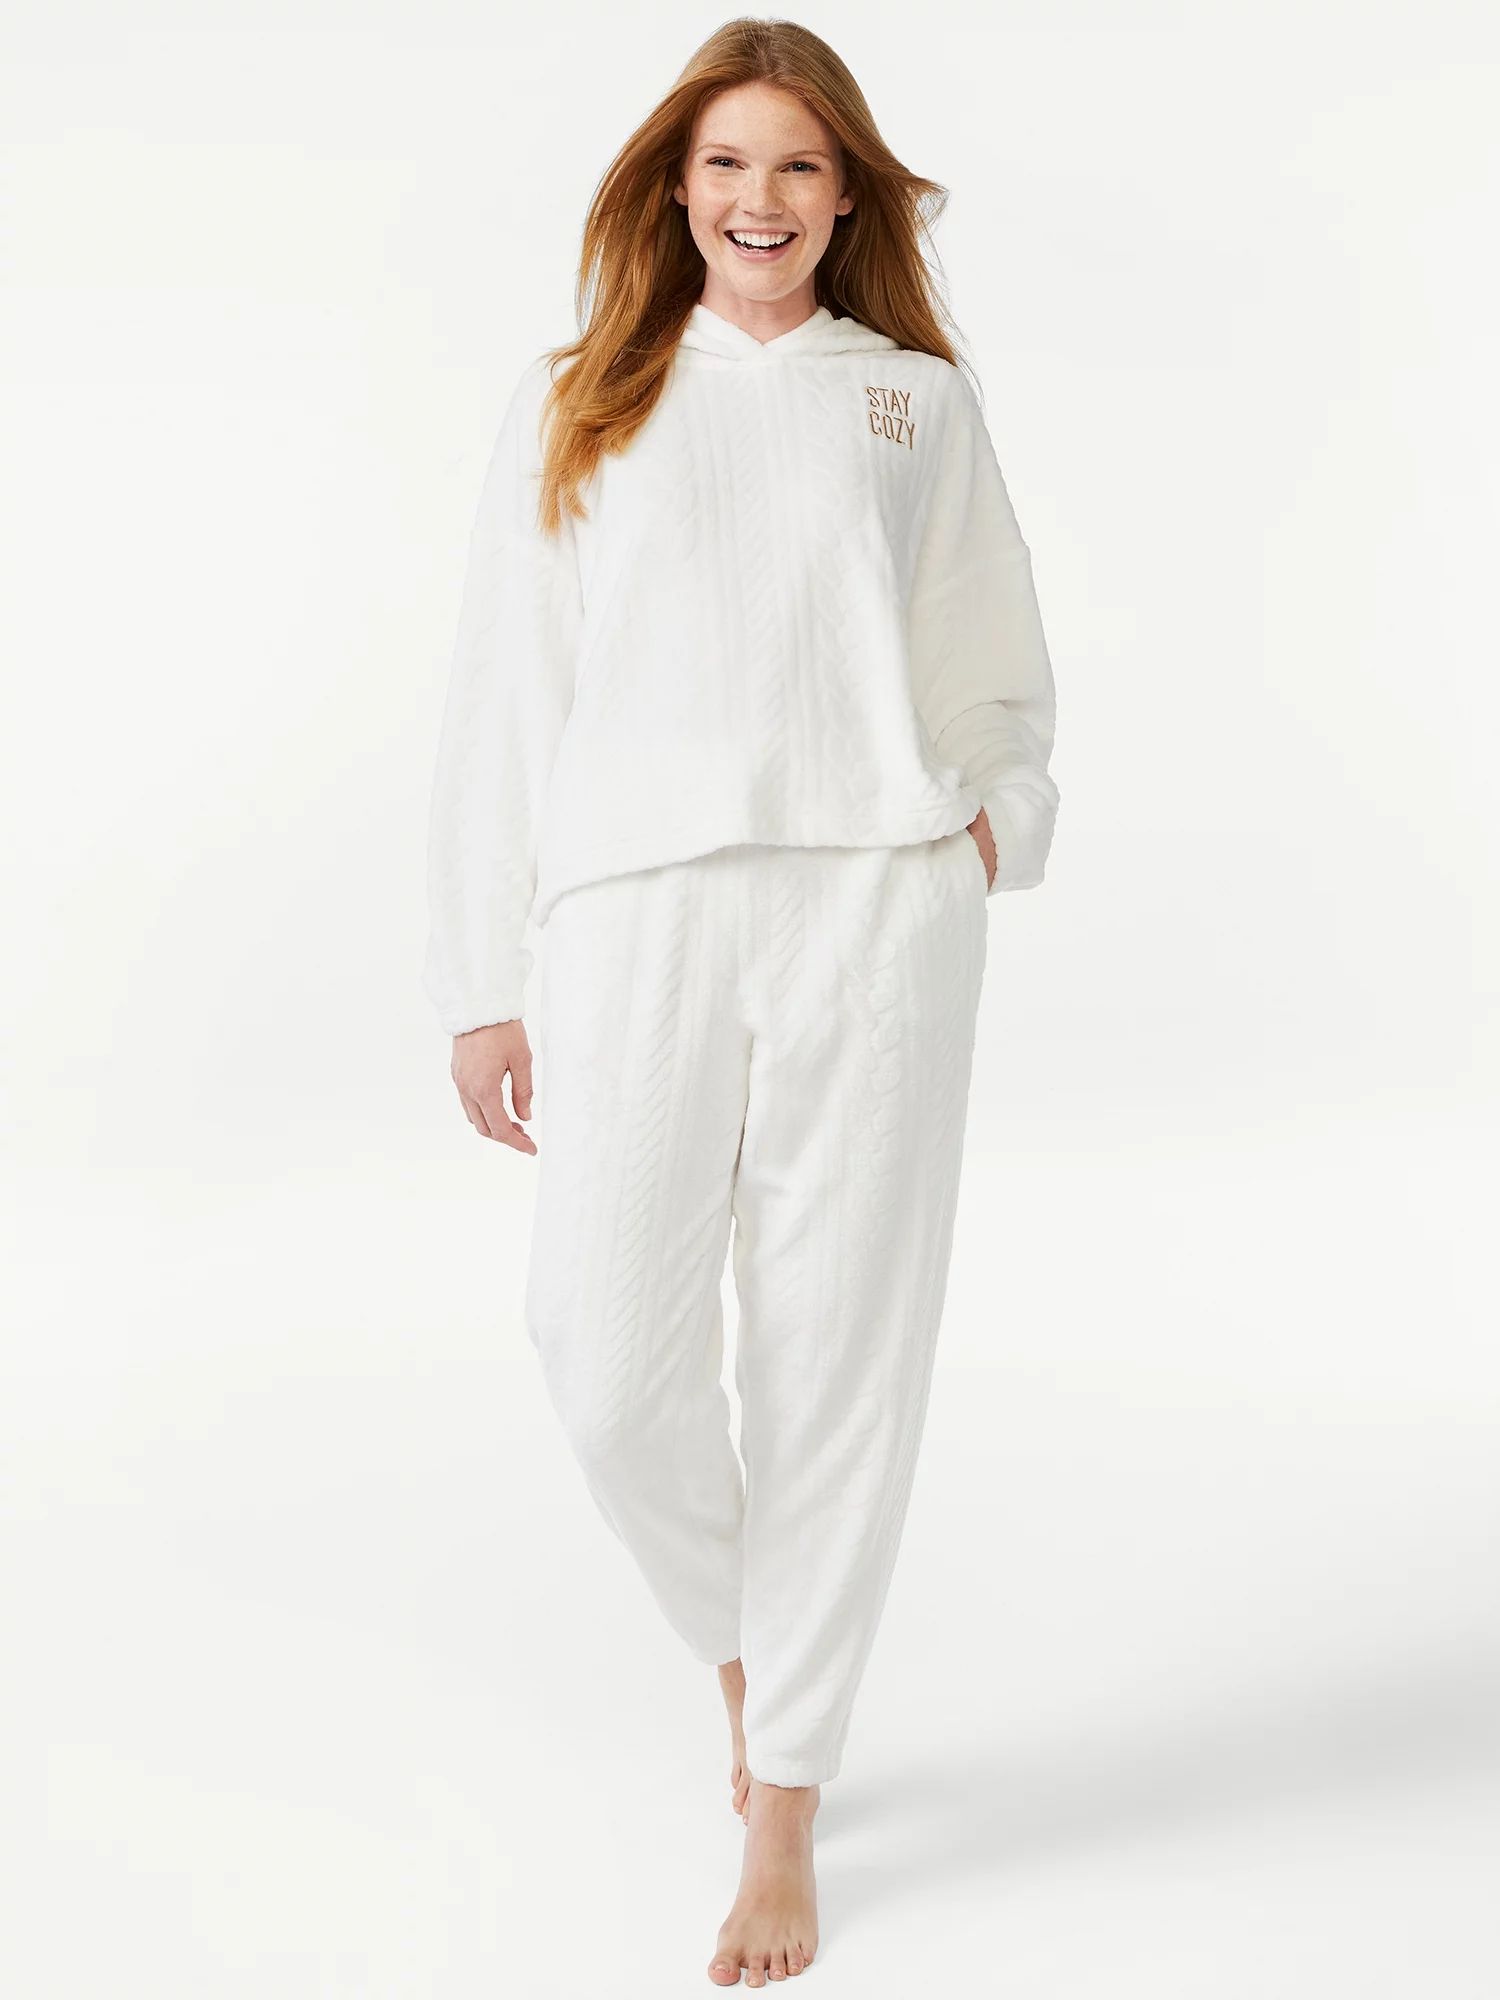 Joyspun Women's Plush Cable Long Sleeve Hooded Top and Pants Pajama Set, 2-Piece, Sizes up to 3X ... | Walmart (US)